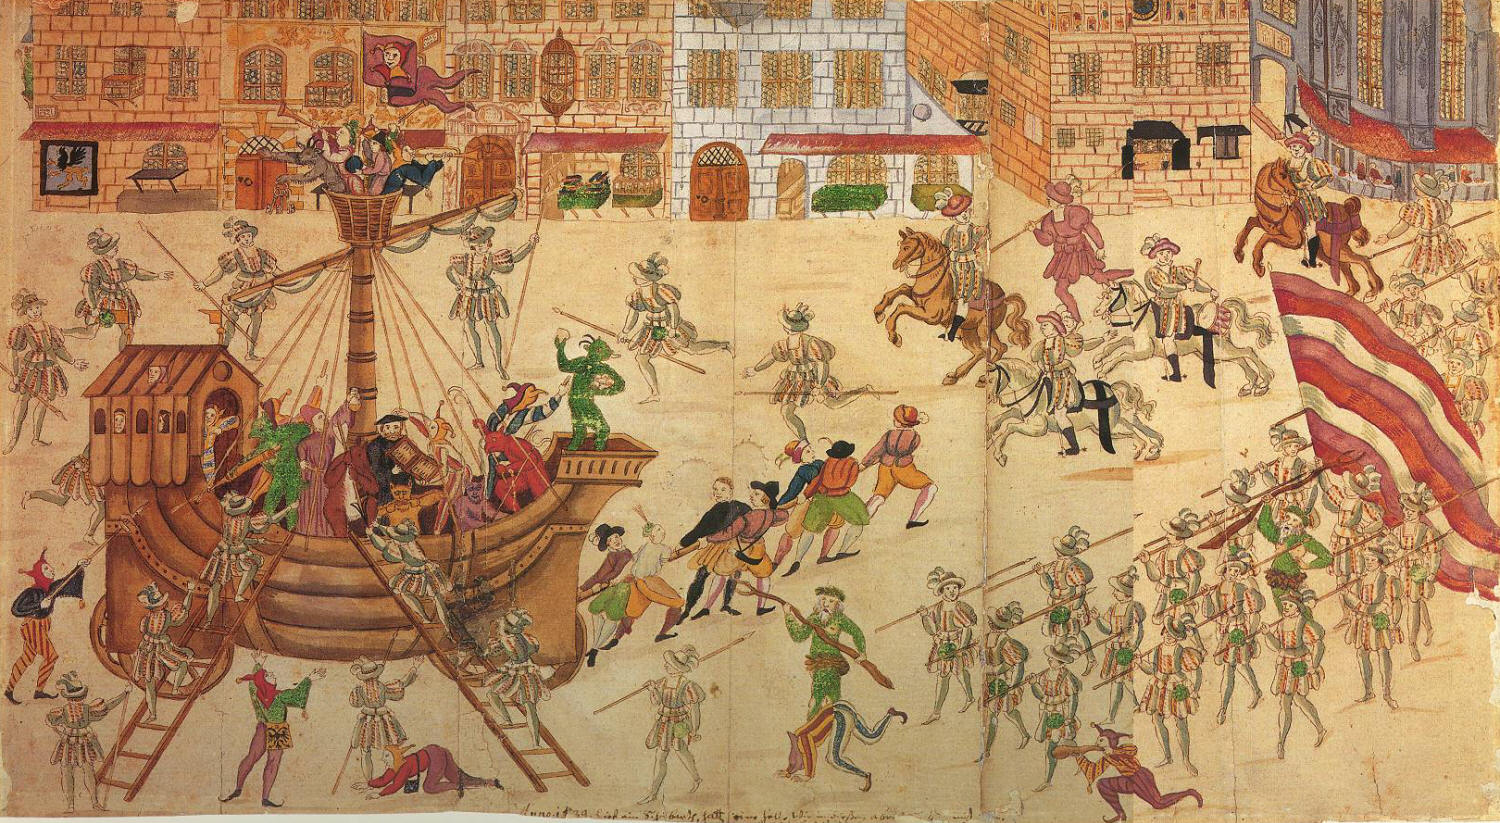 Schembartlauf in Nuremberg 1539